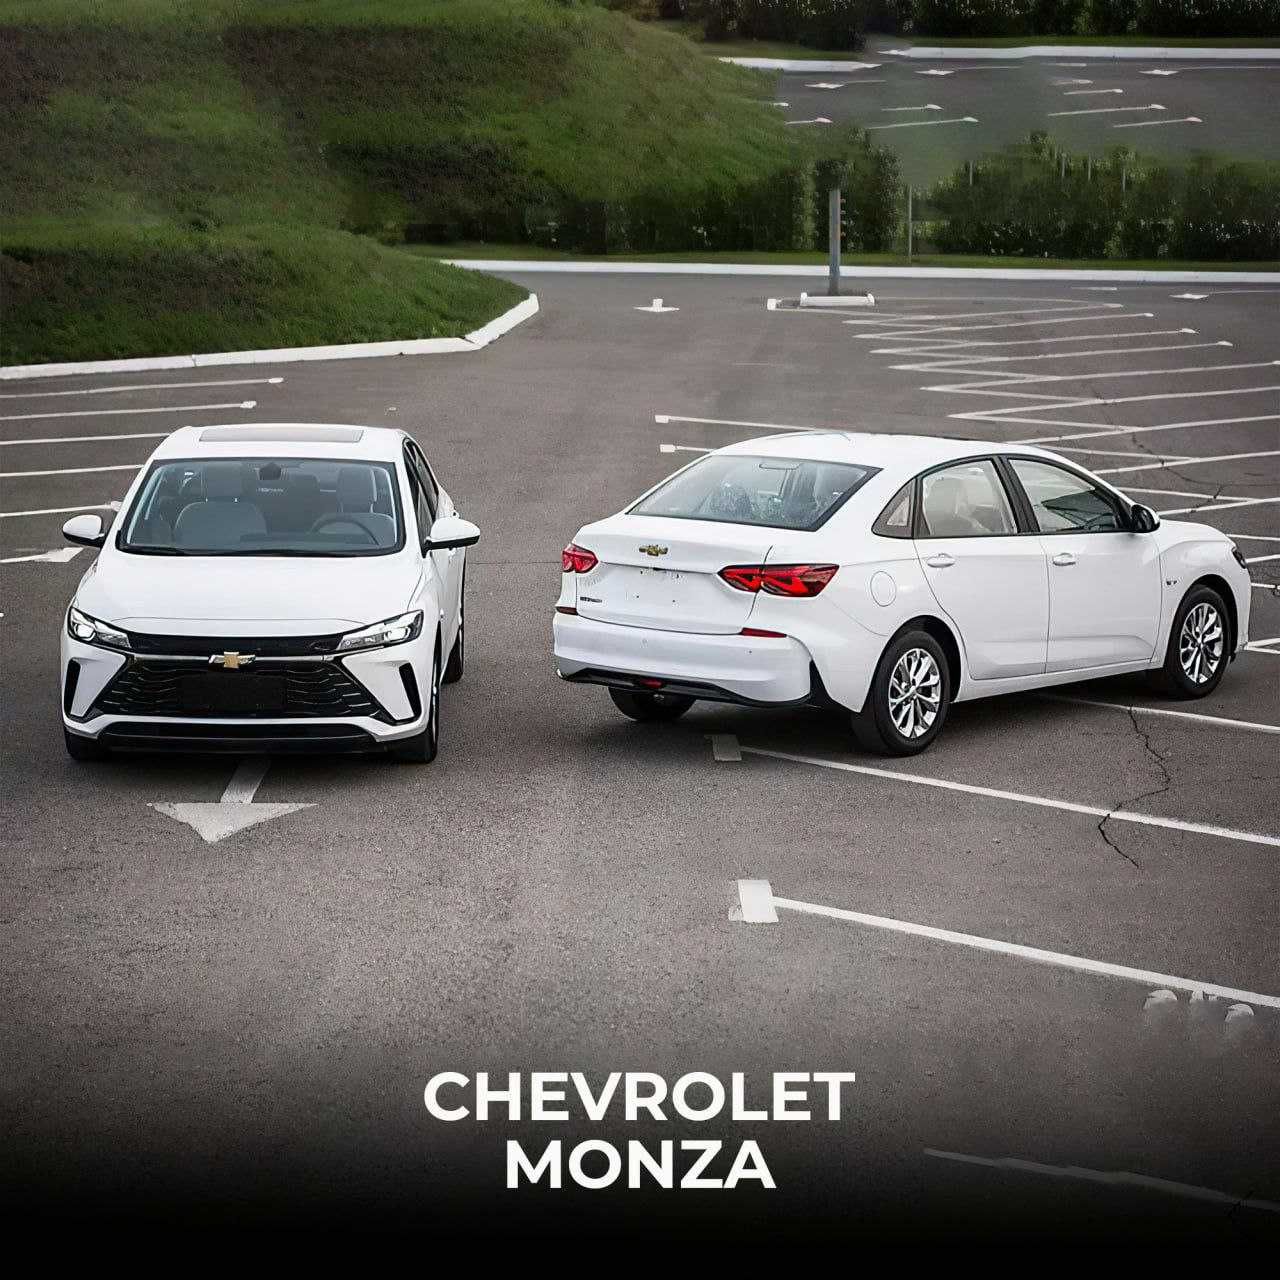 Chevrolet Monza 1.5 atmosferniy